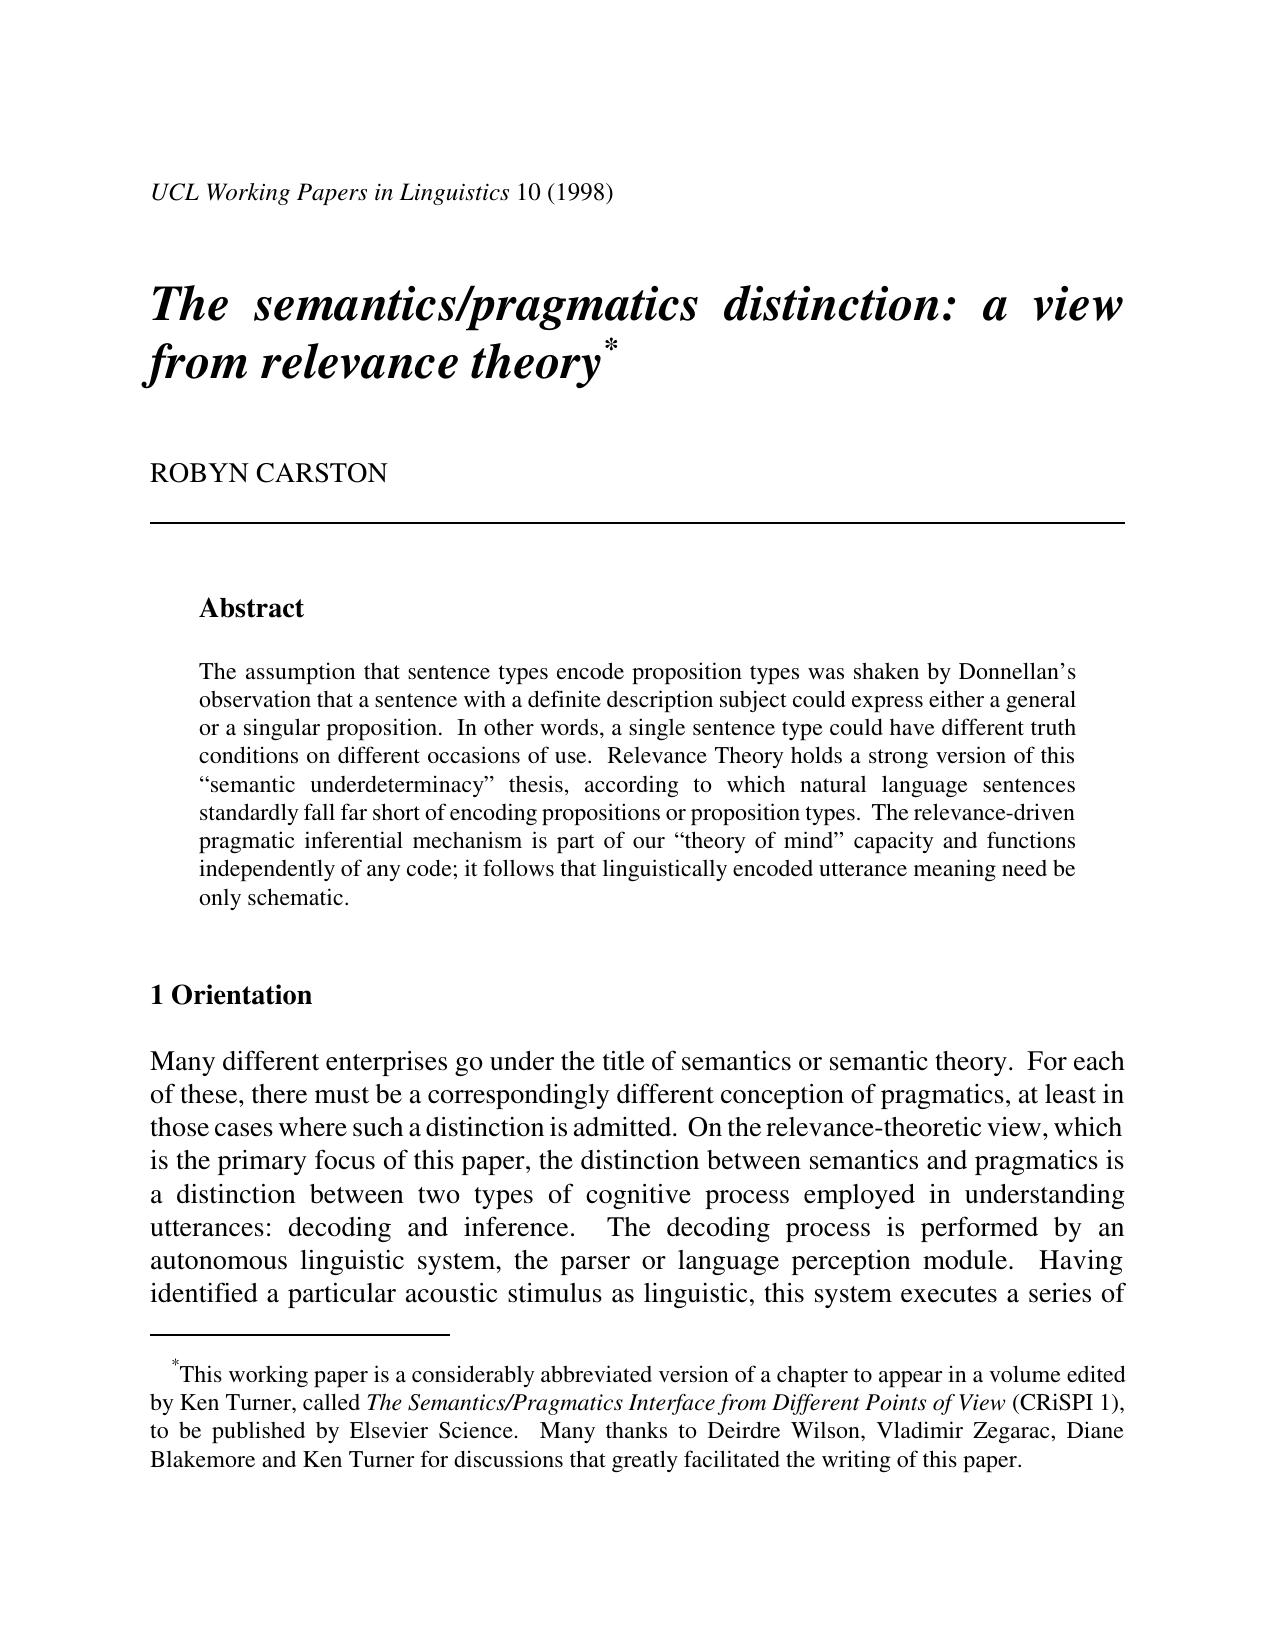 The semantics/pragmatics distinction: a view  from relevance theory